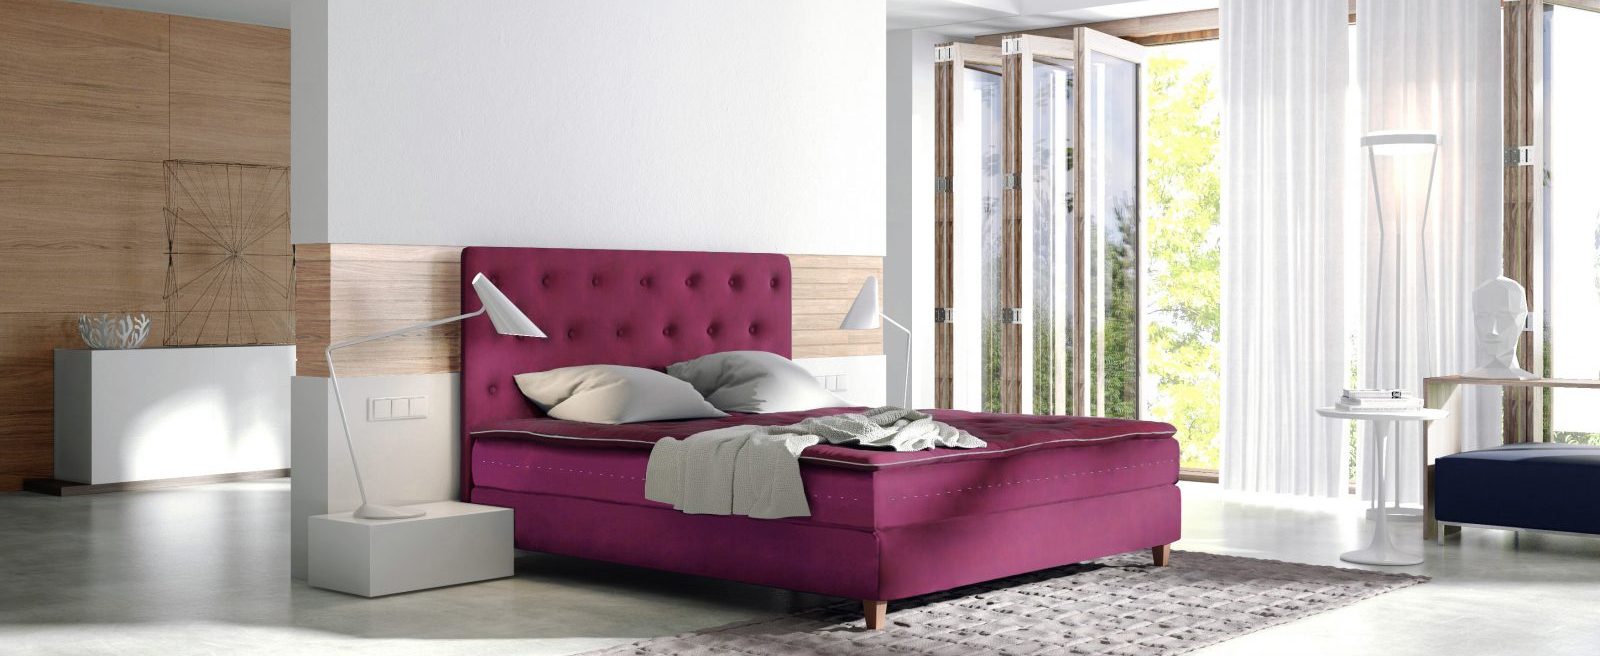 pauly-beds-continental-luxury-mattress-venus-small